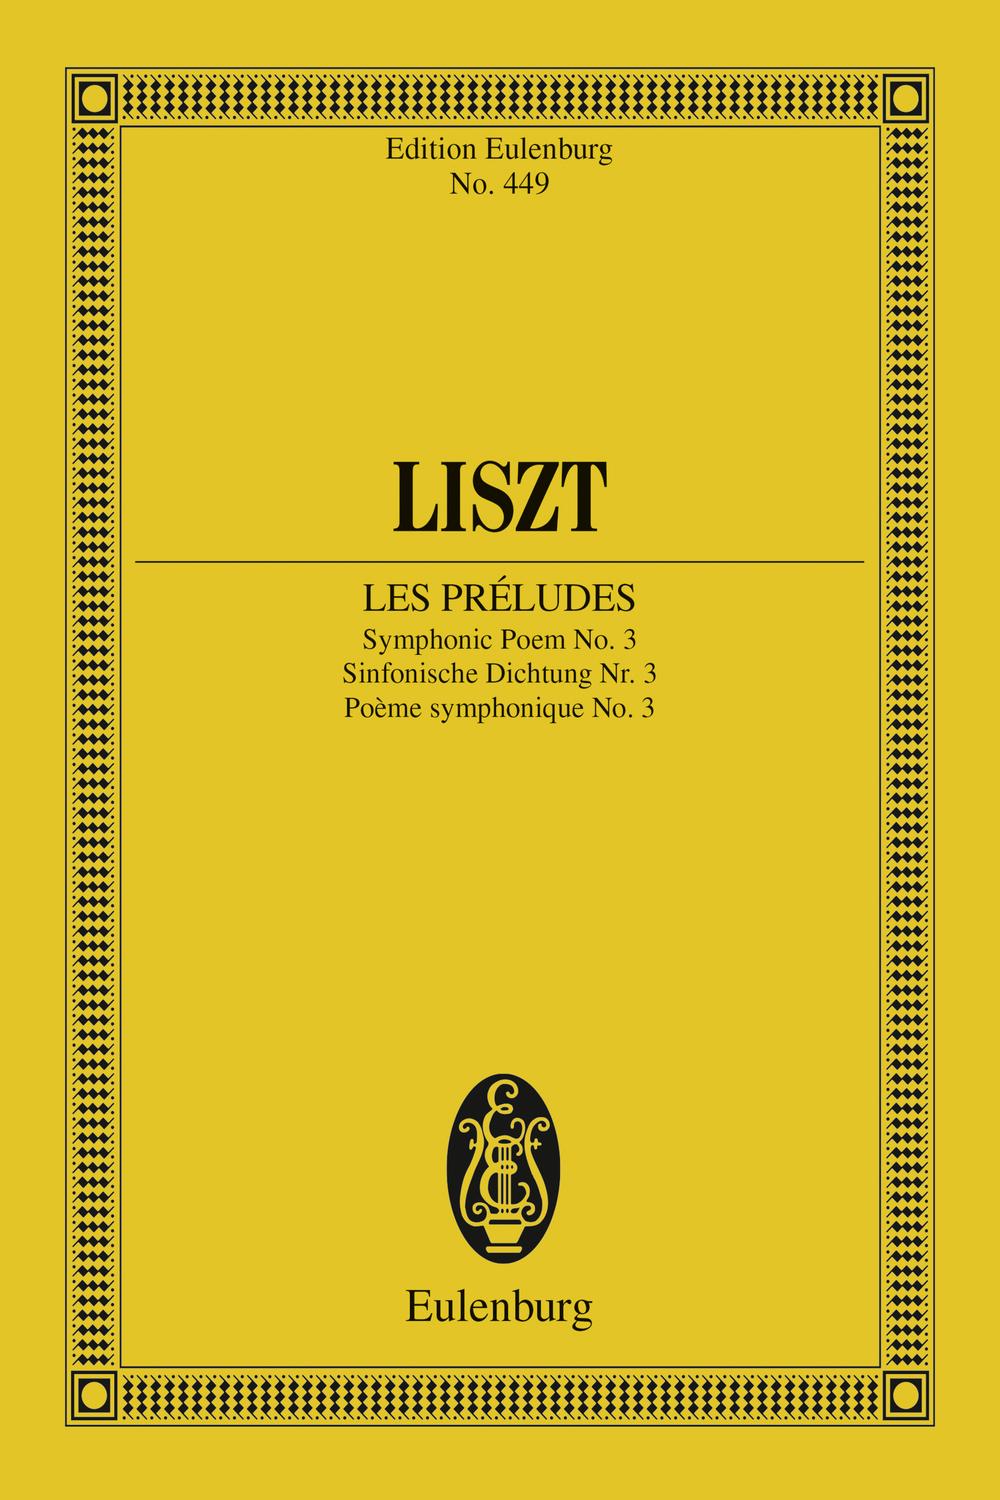 Les Préludes - Franz Liszt